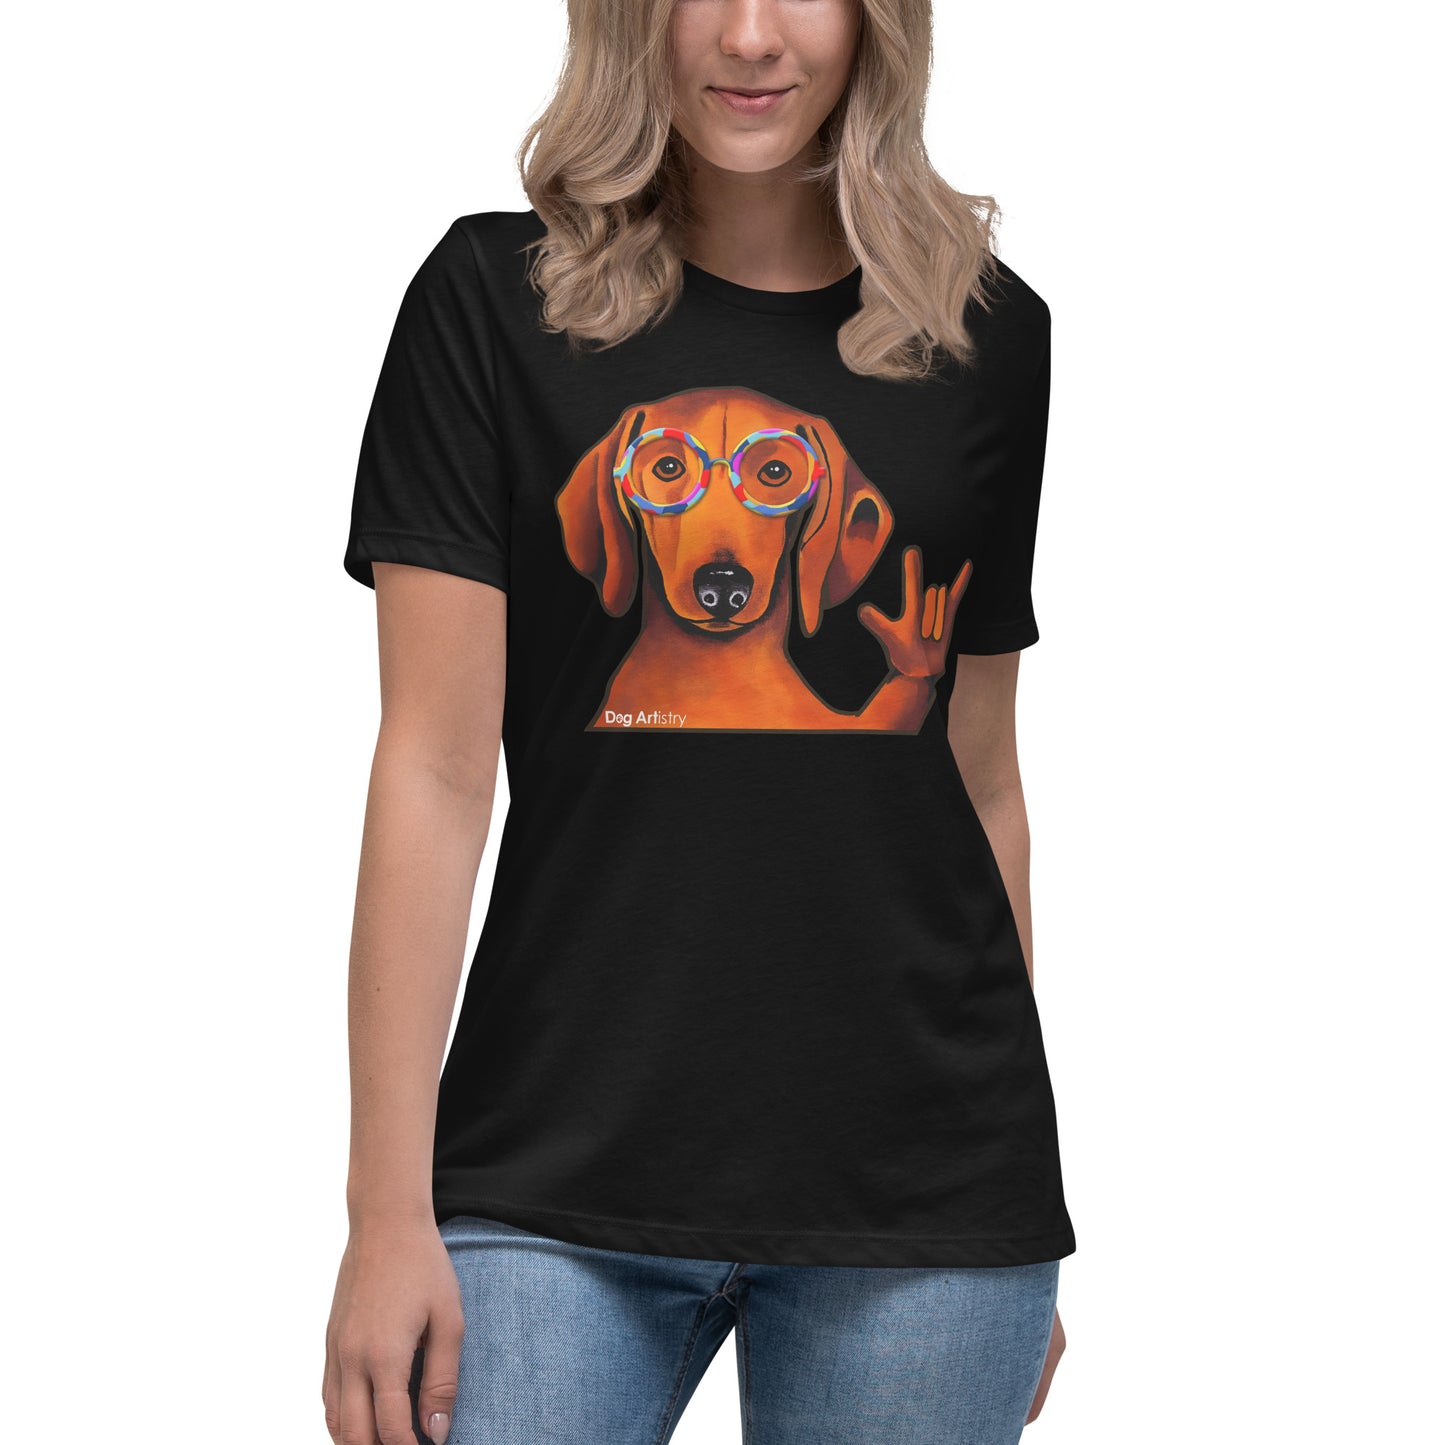 Dachshund love women's t-shirt black by Dog Artistry